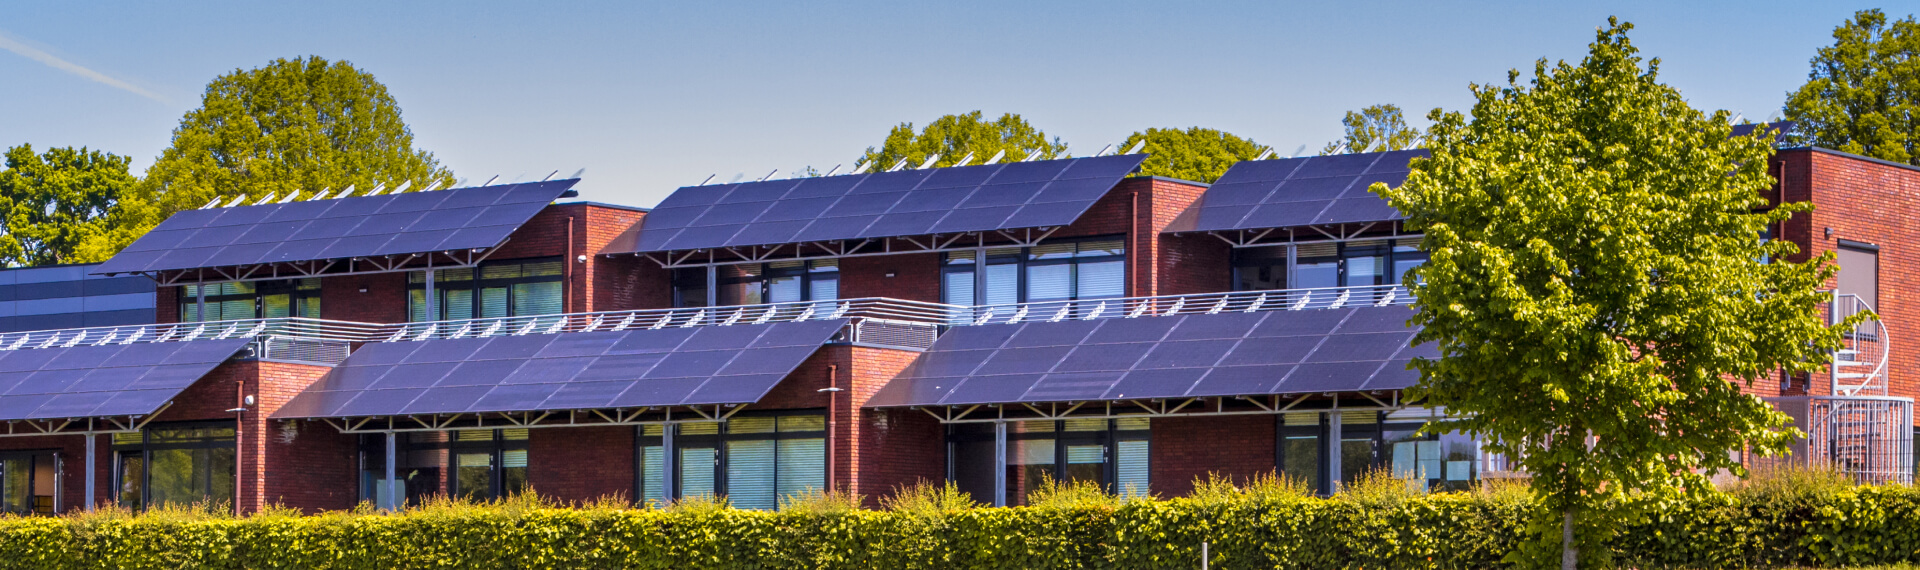 solar pro public school building with solar panels